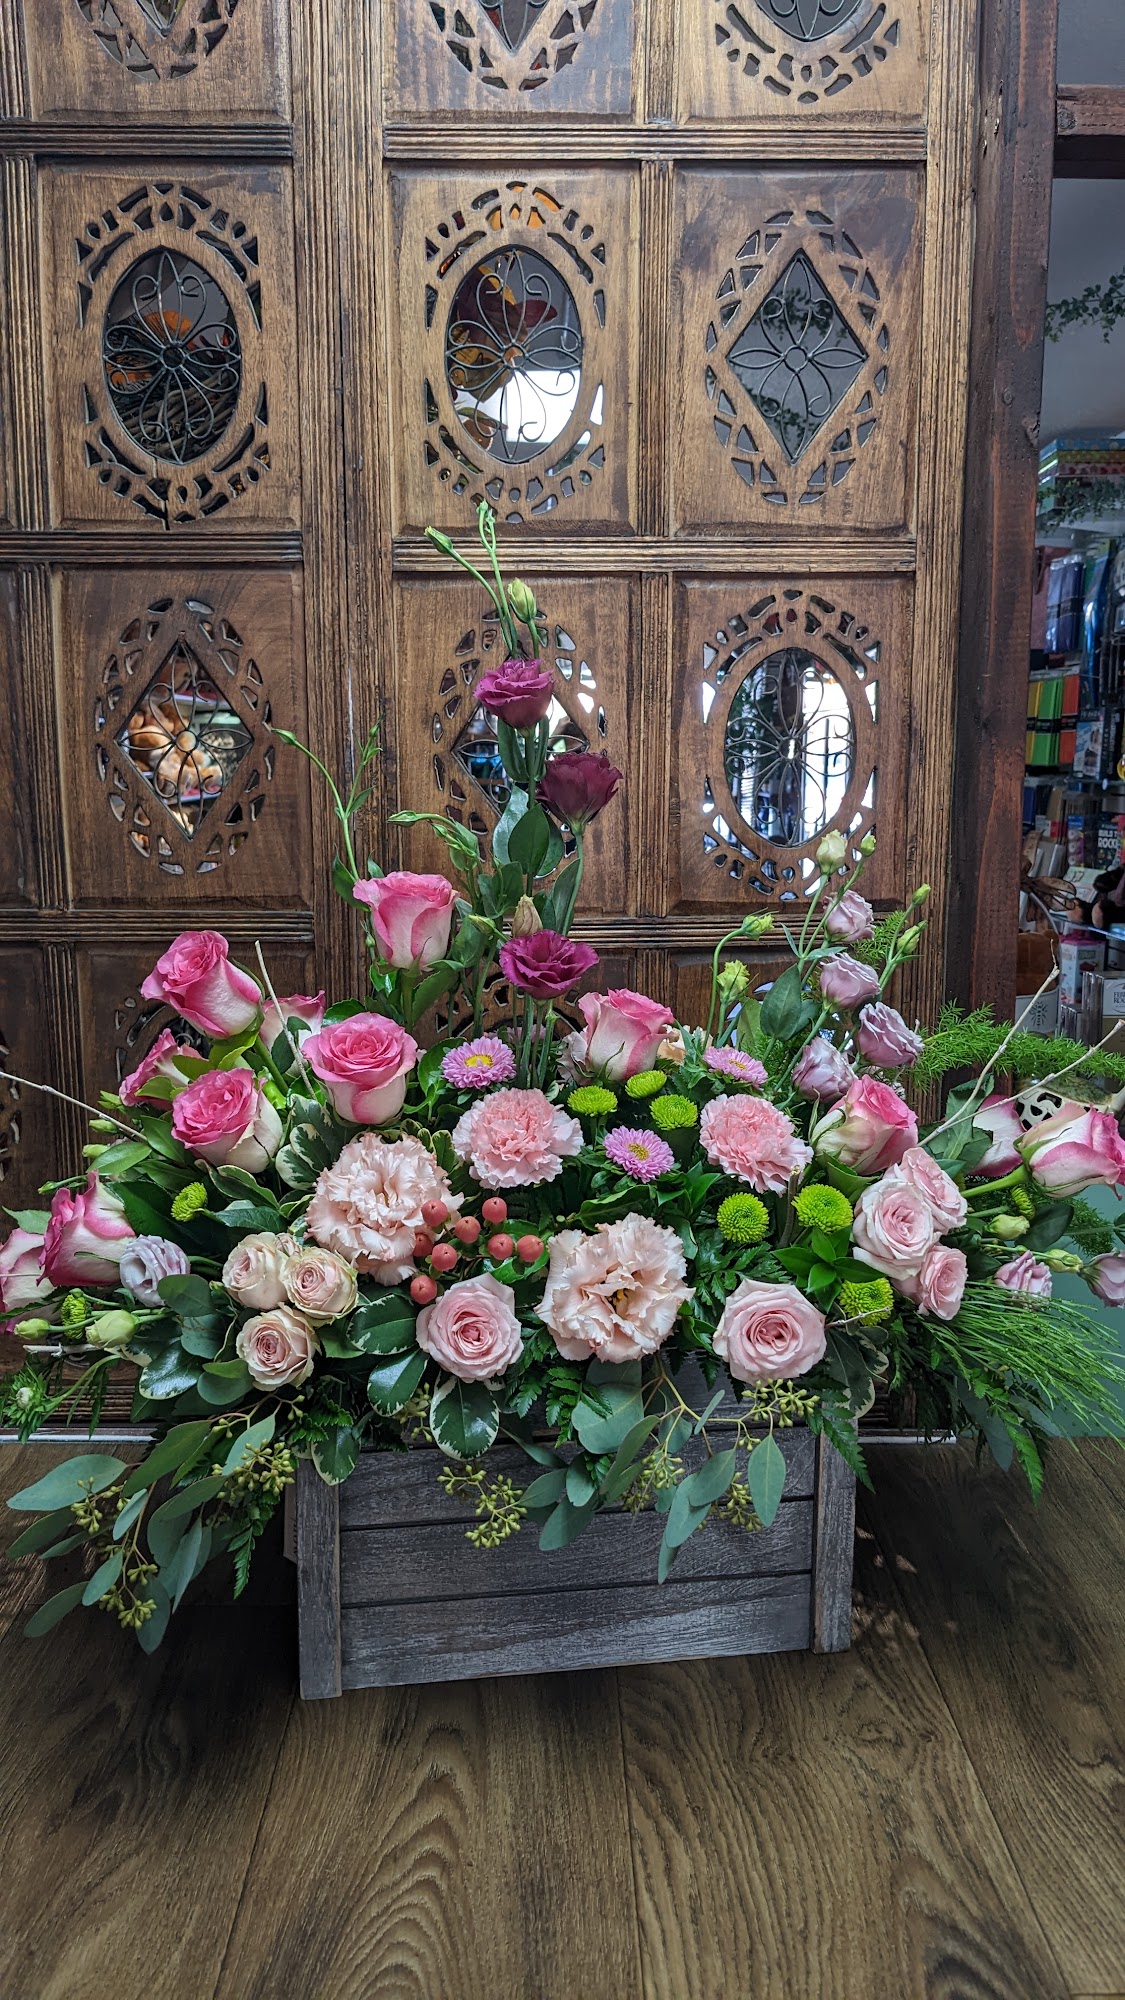 ARIS Flower Shop